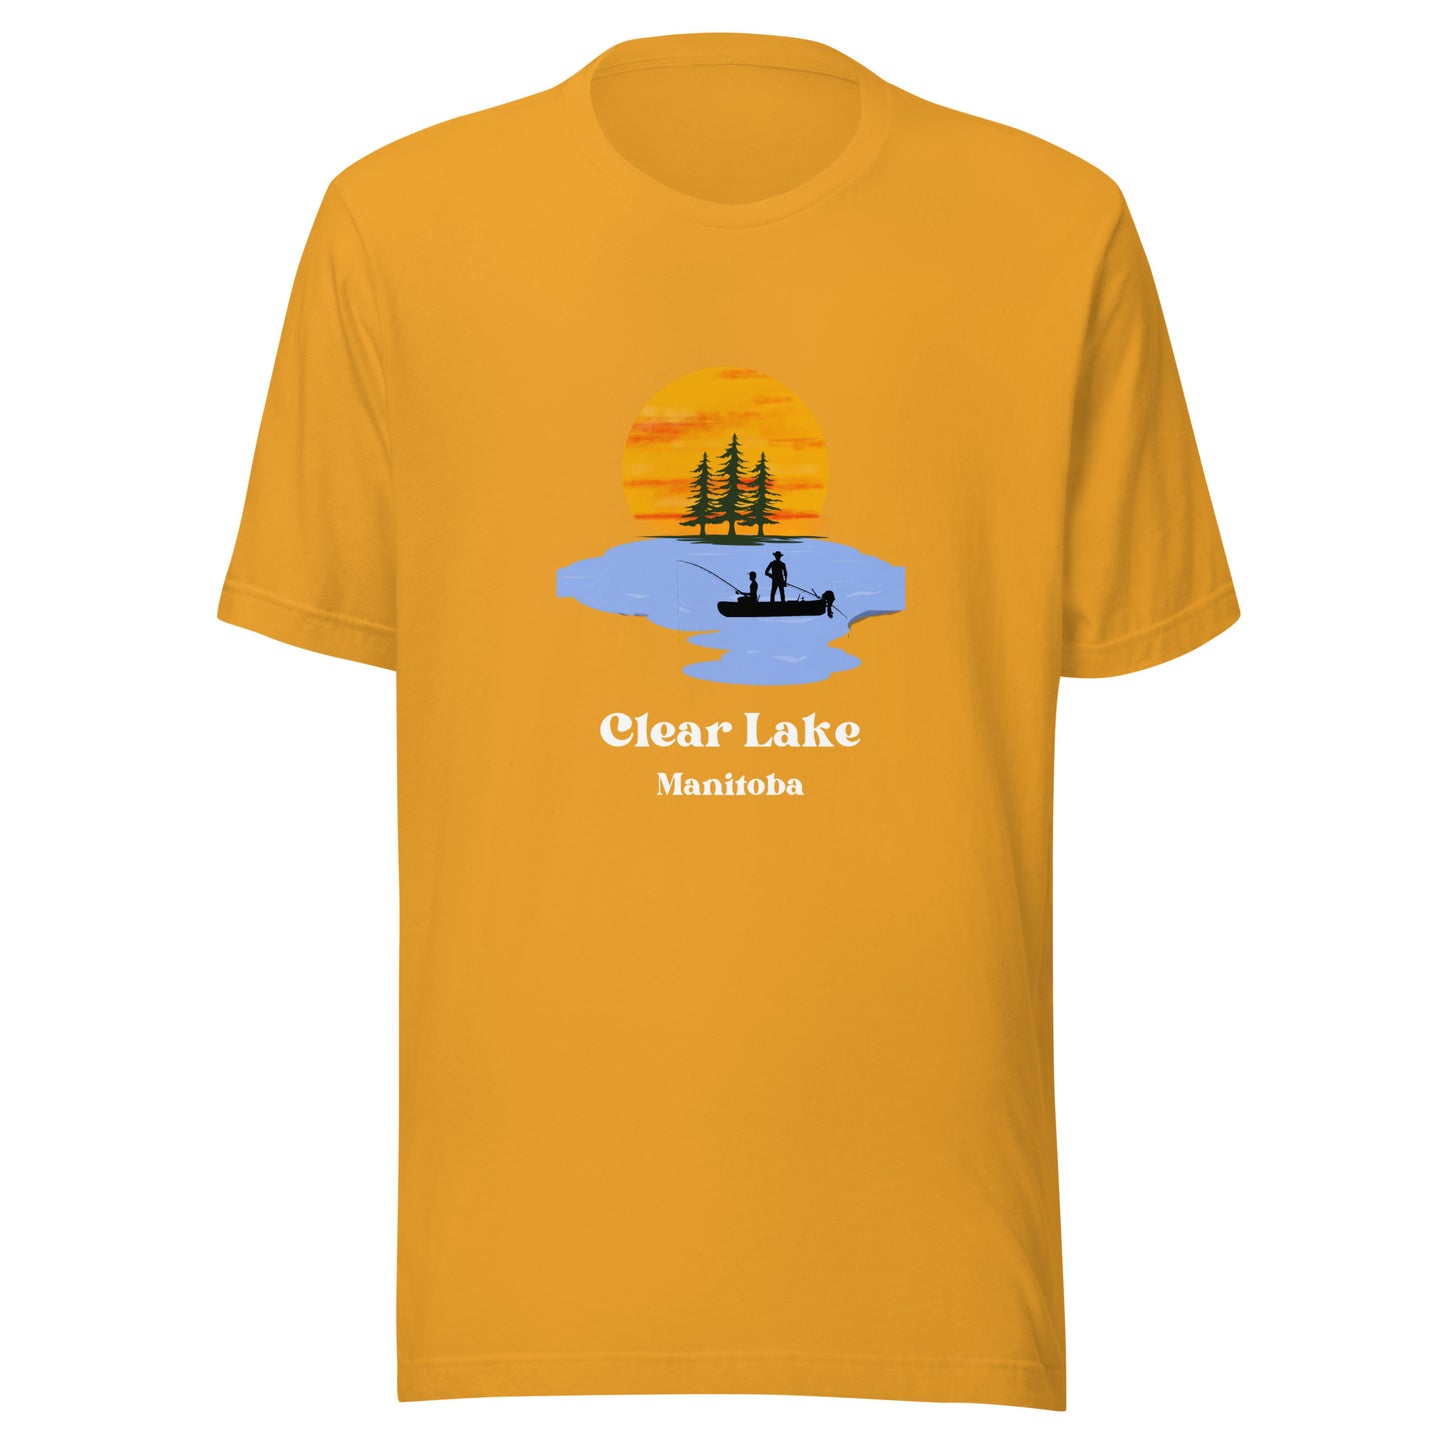 Clear Lake, MB - T-shirt Fishing